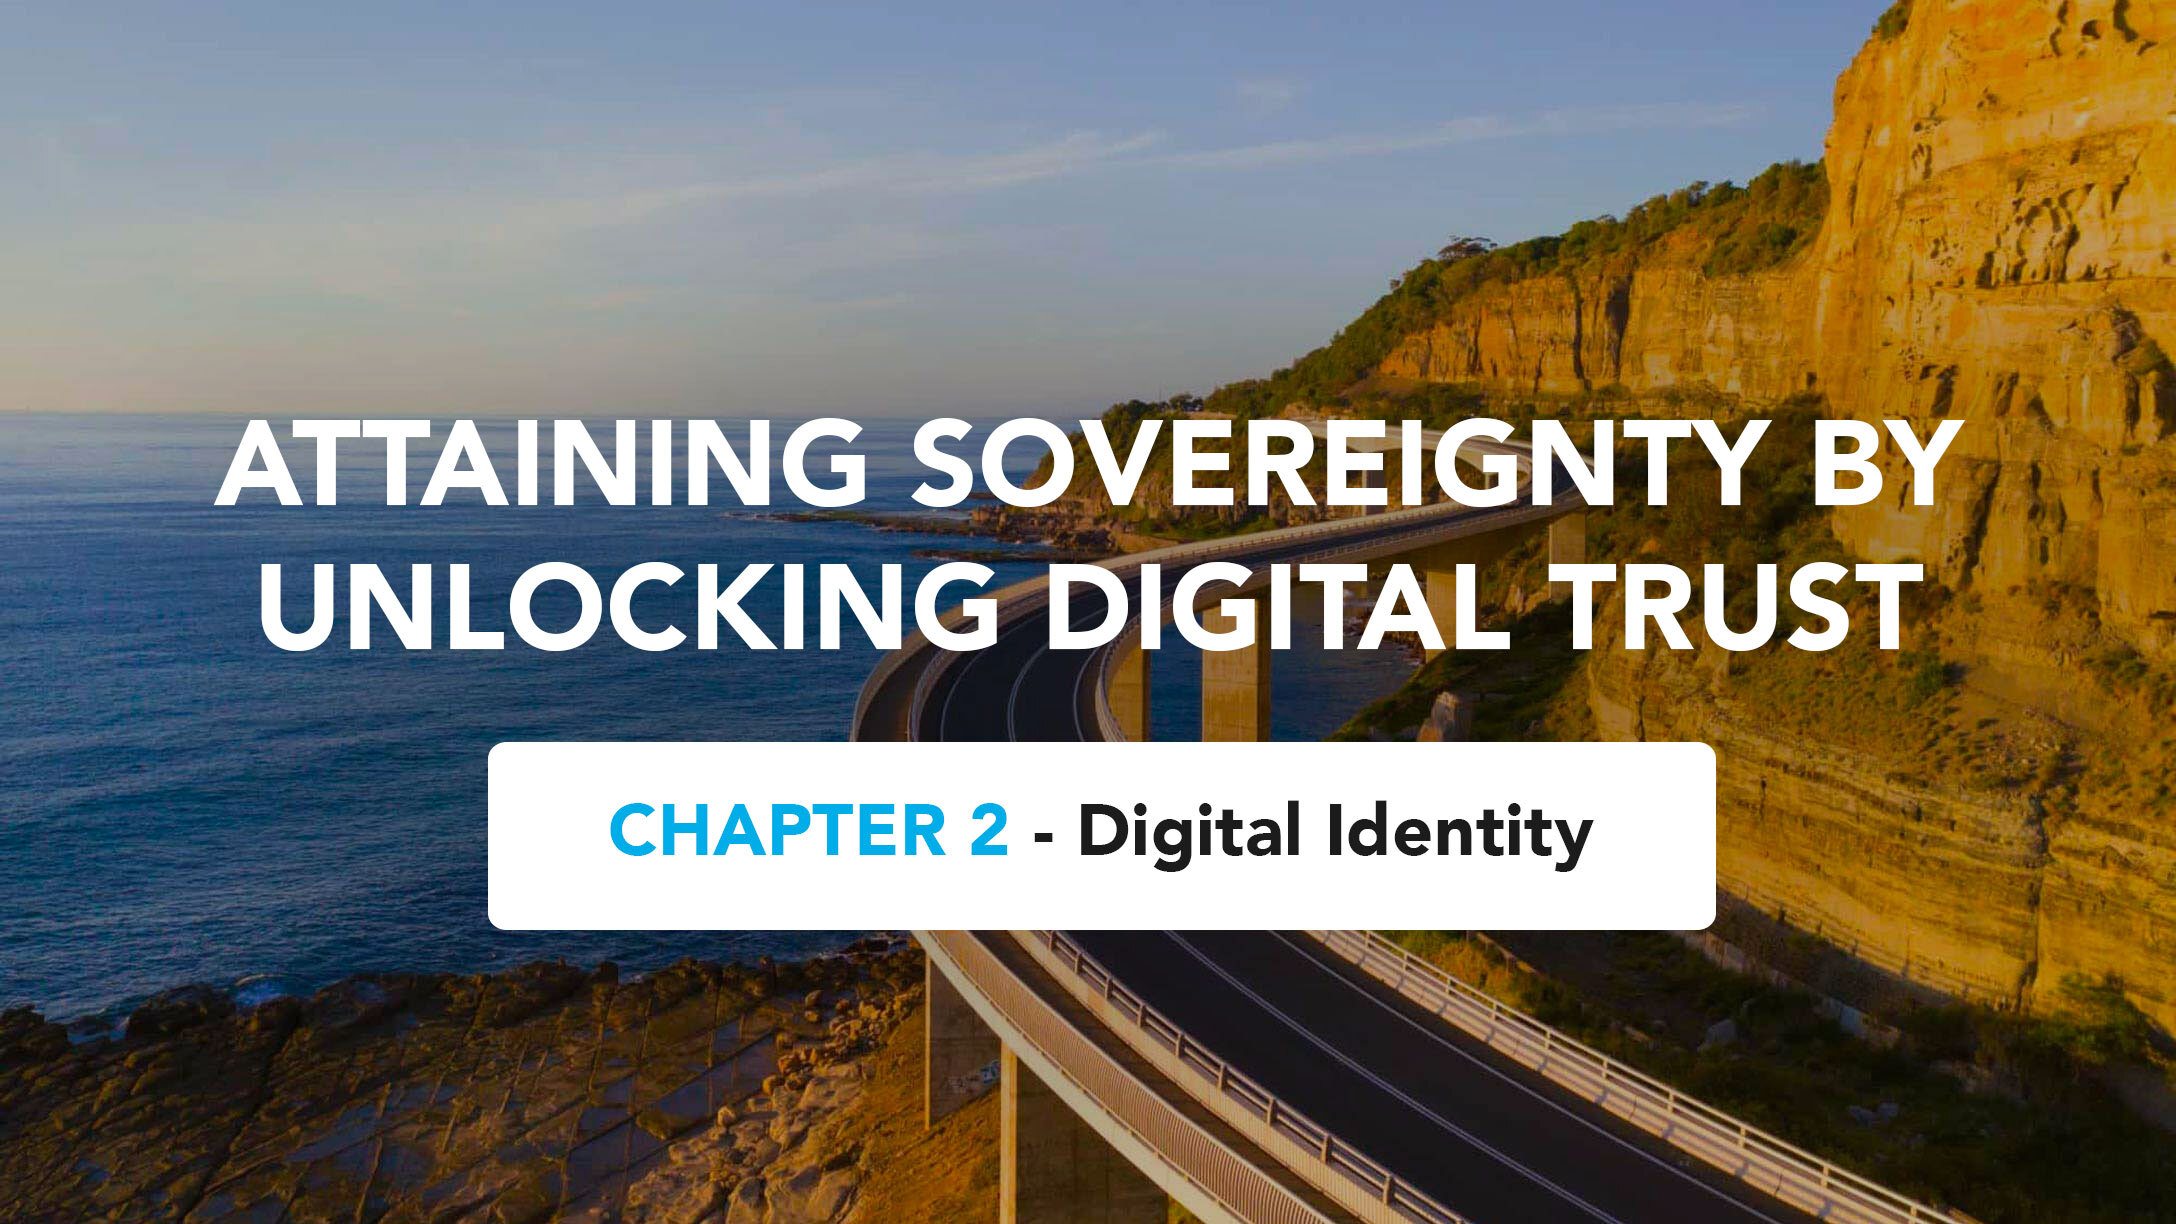 Chapter 2 – Digital Identity (from Attaining Sovereignty by Unlocking Digital Trust)